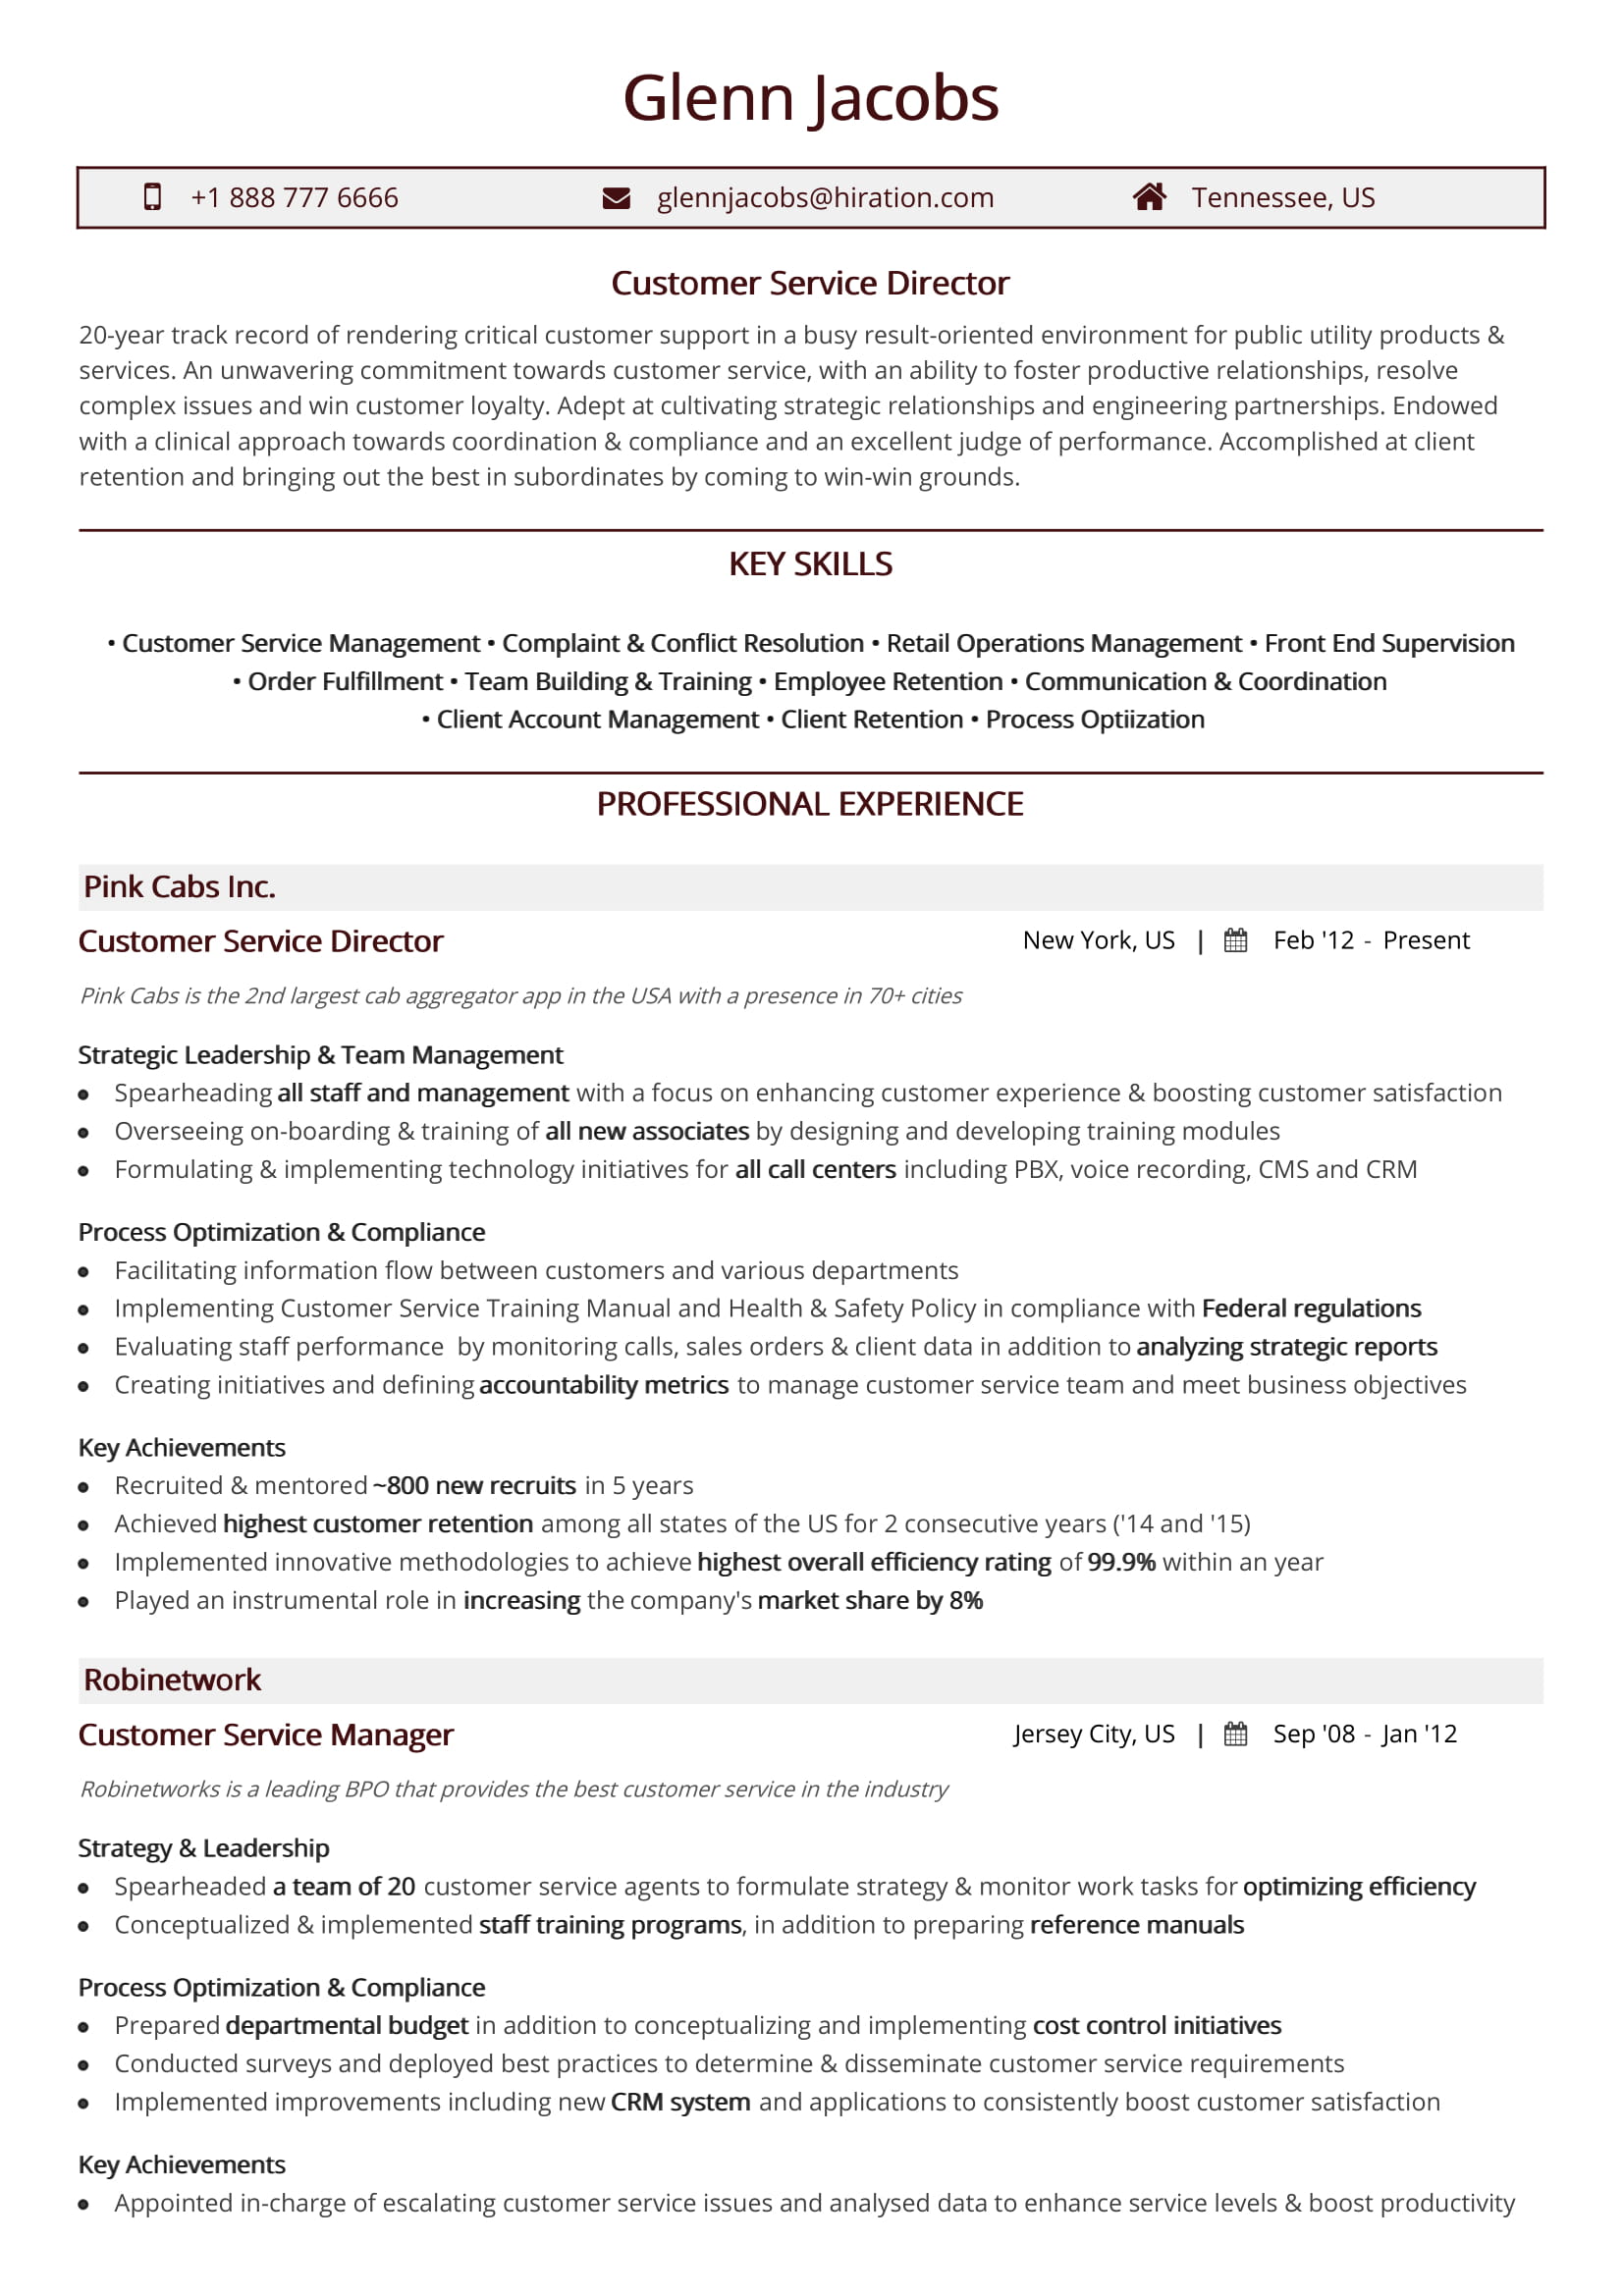 Customer Service Resume Skills Customer Service Director customer service resume skills|wikiresume.com